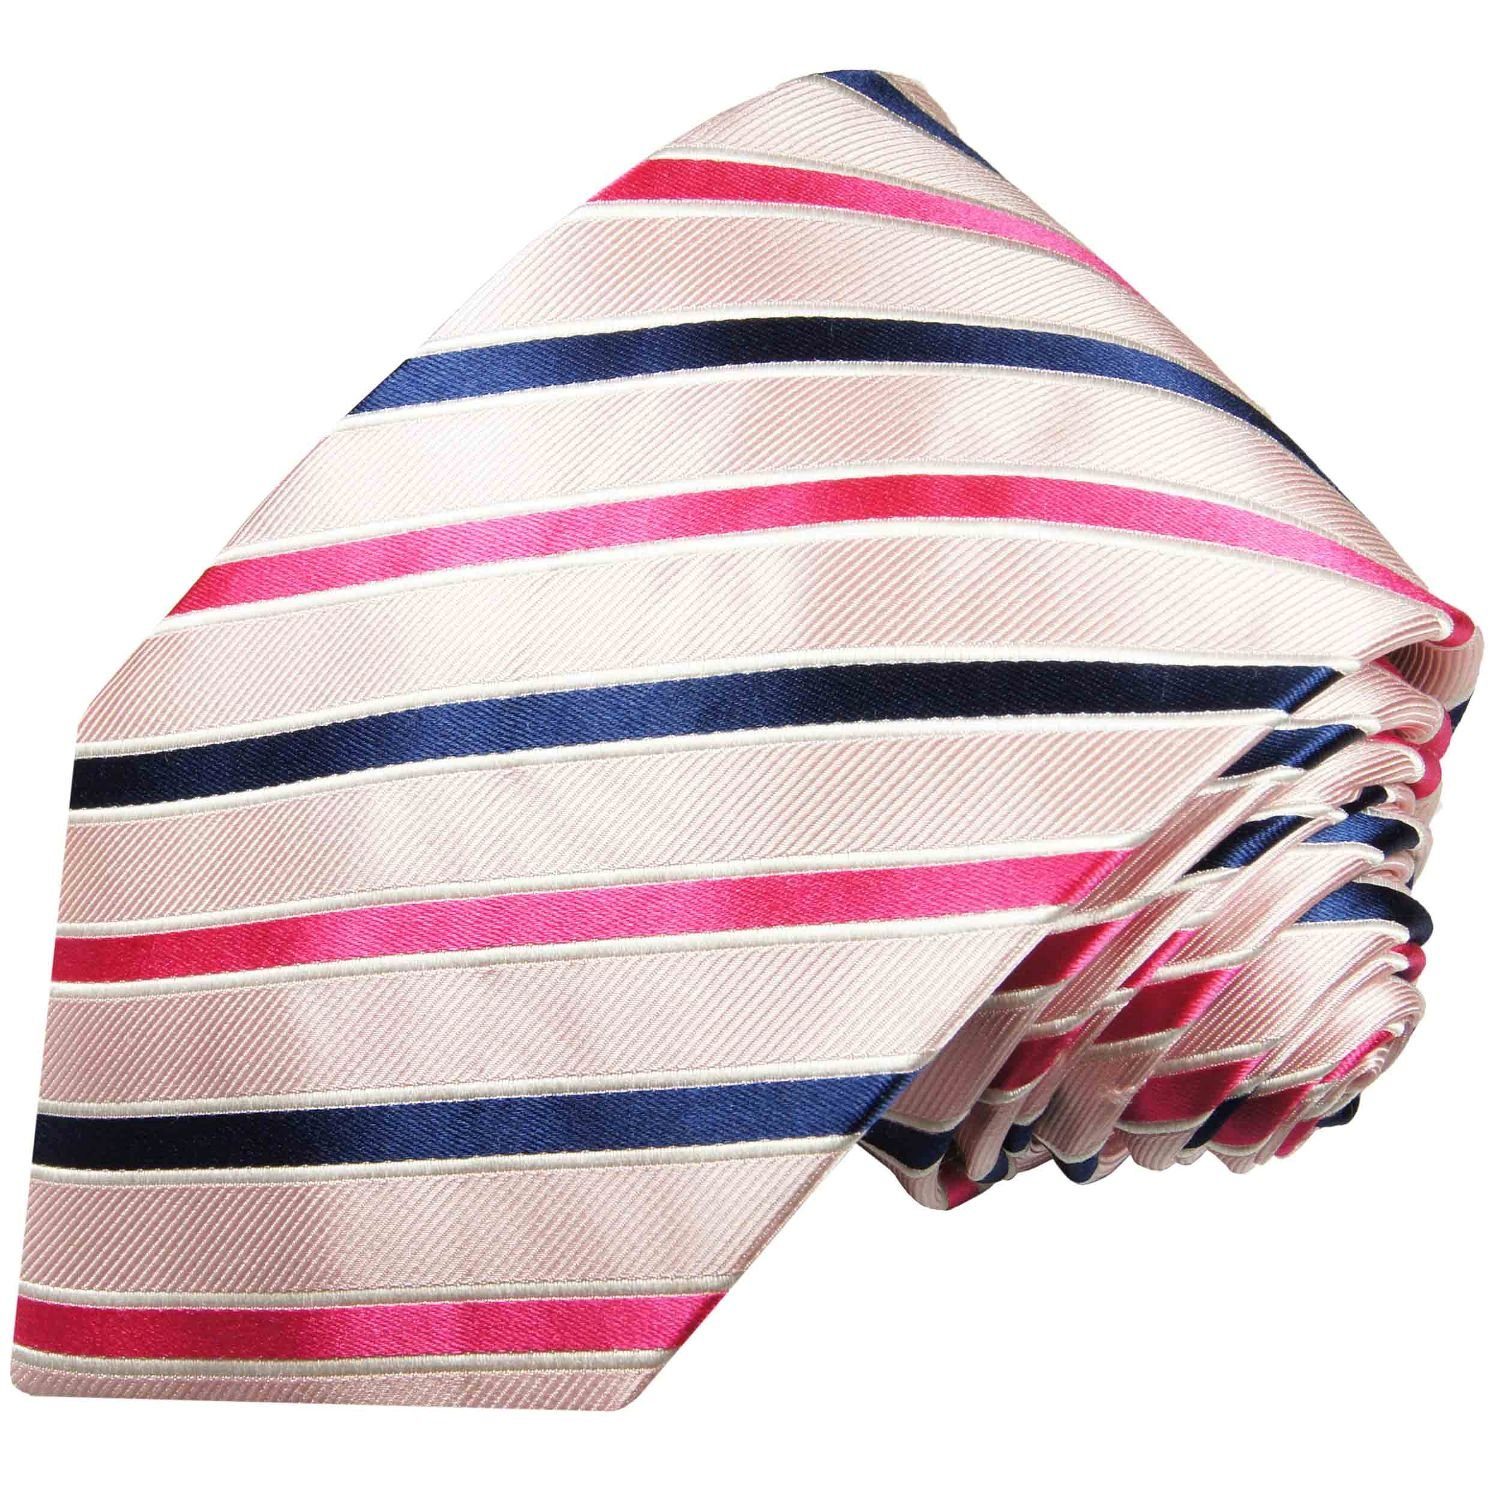 Paul Malone Krawatte Designer Seidenkrawatte Herren Schlips modern gestreift 100% Seide Schmal (6cm), rosa pink blau 600